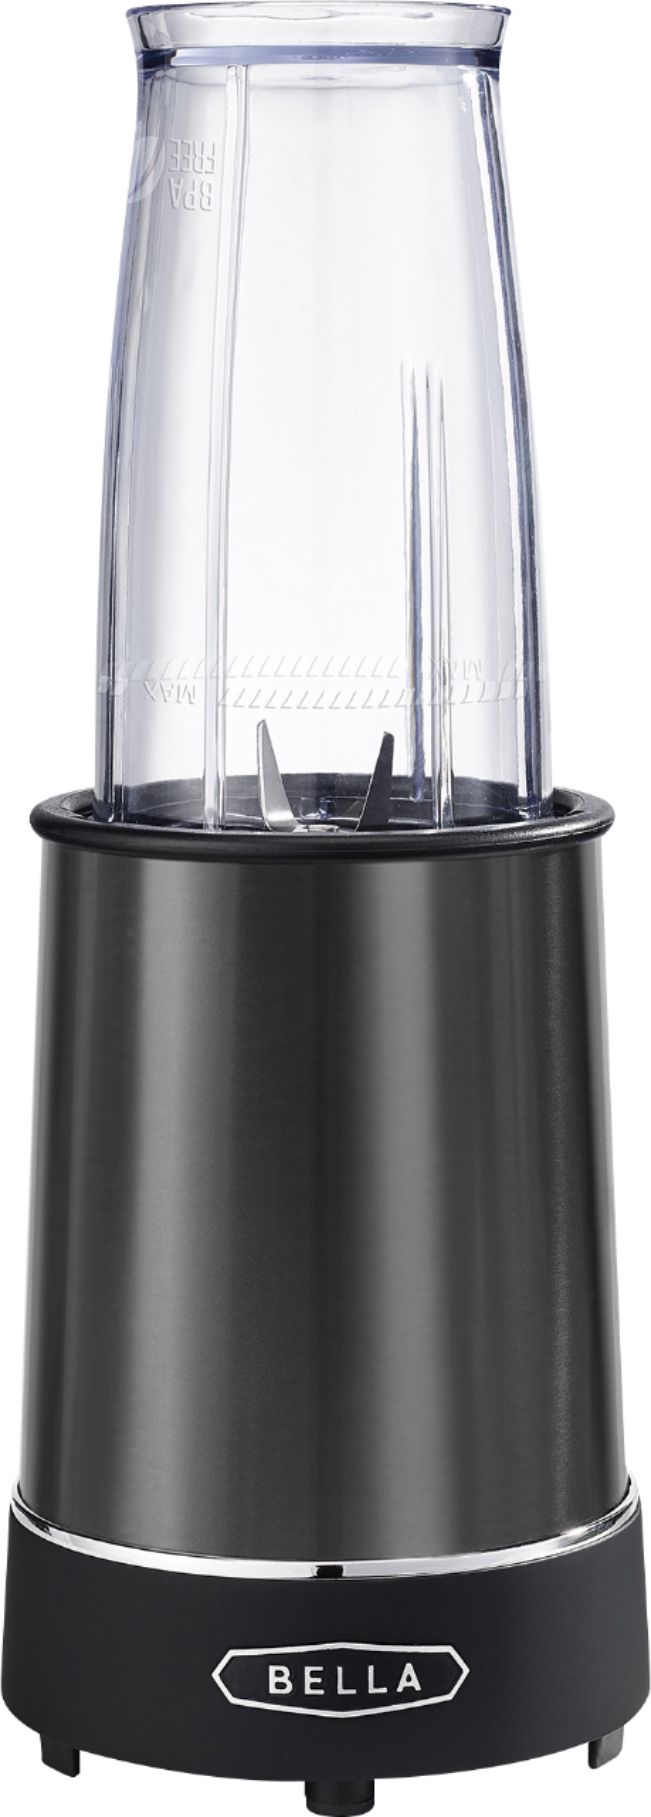 Bella Cucina Rocket Blender PARTS. (2) Short Cups, Black Lid, & Flat 2X  Grinder